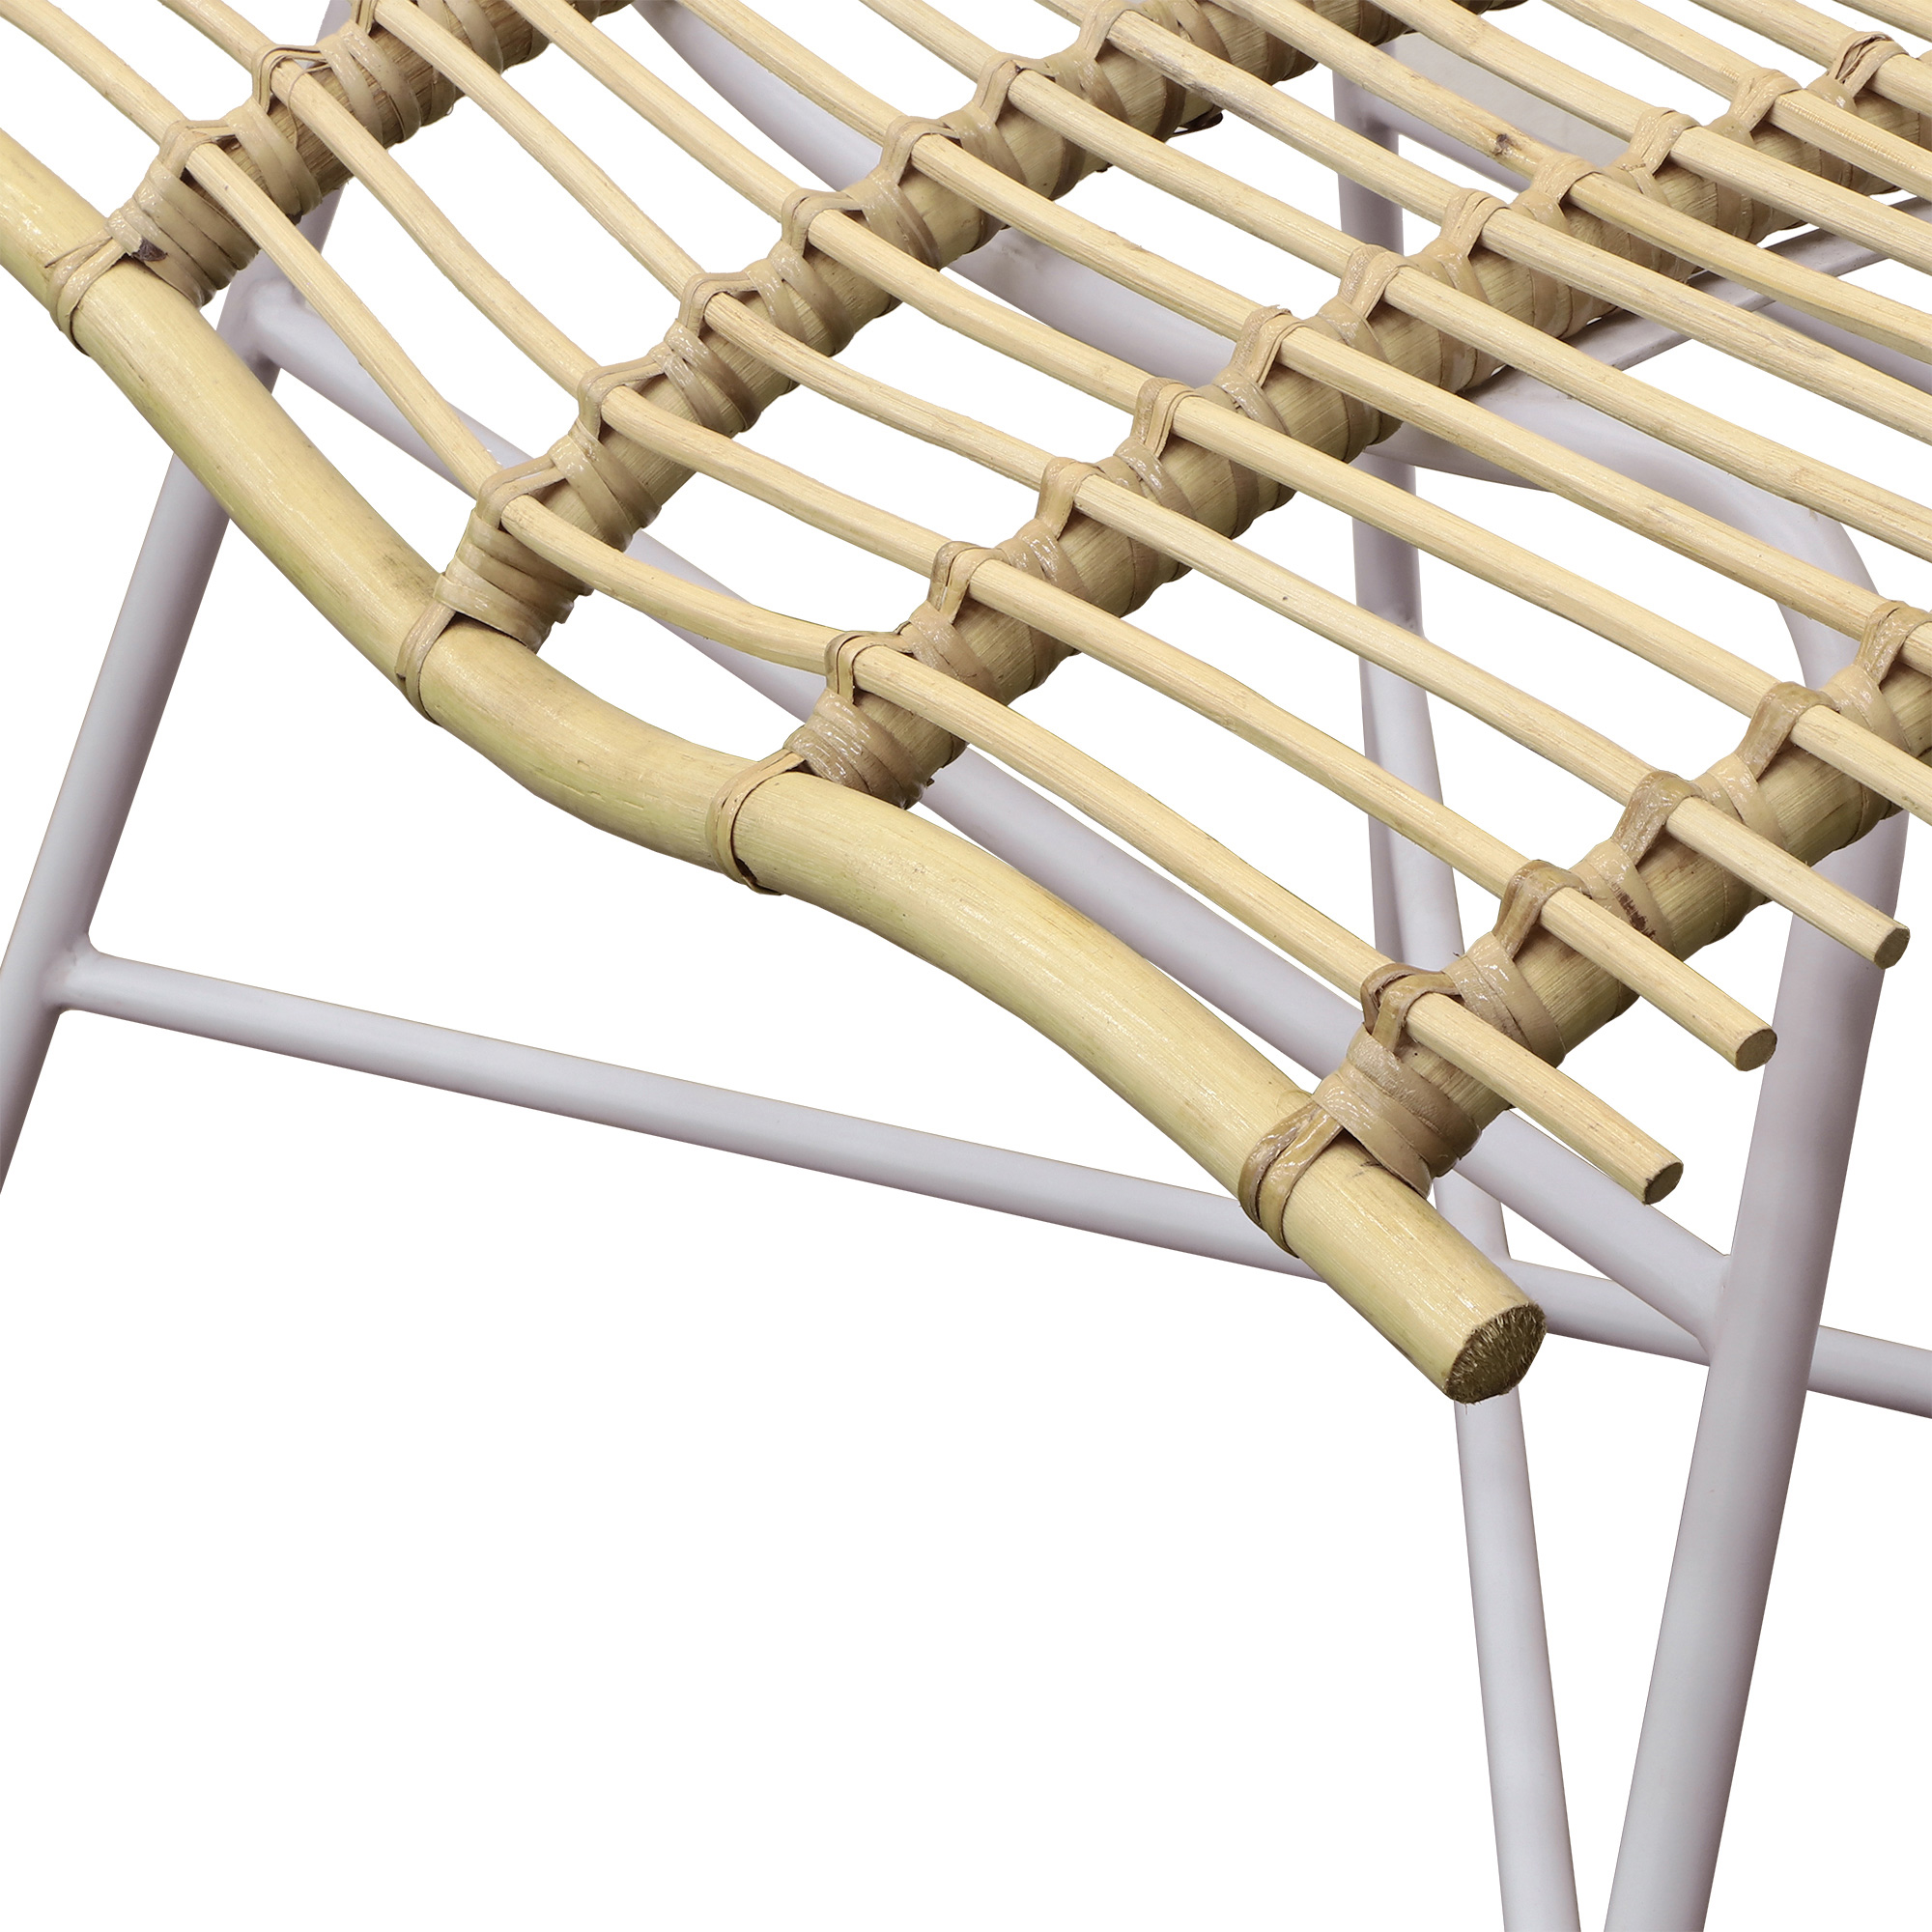 фото Комплект мебели rattan grand nuvali шезлонг с подставкой для ног (rg-ldsf015-ncll/rg-fs015-ncll)